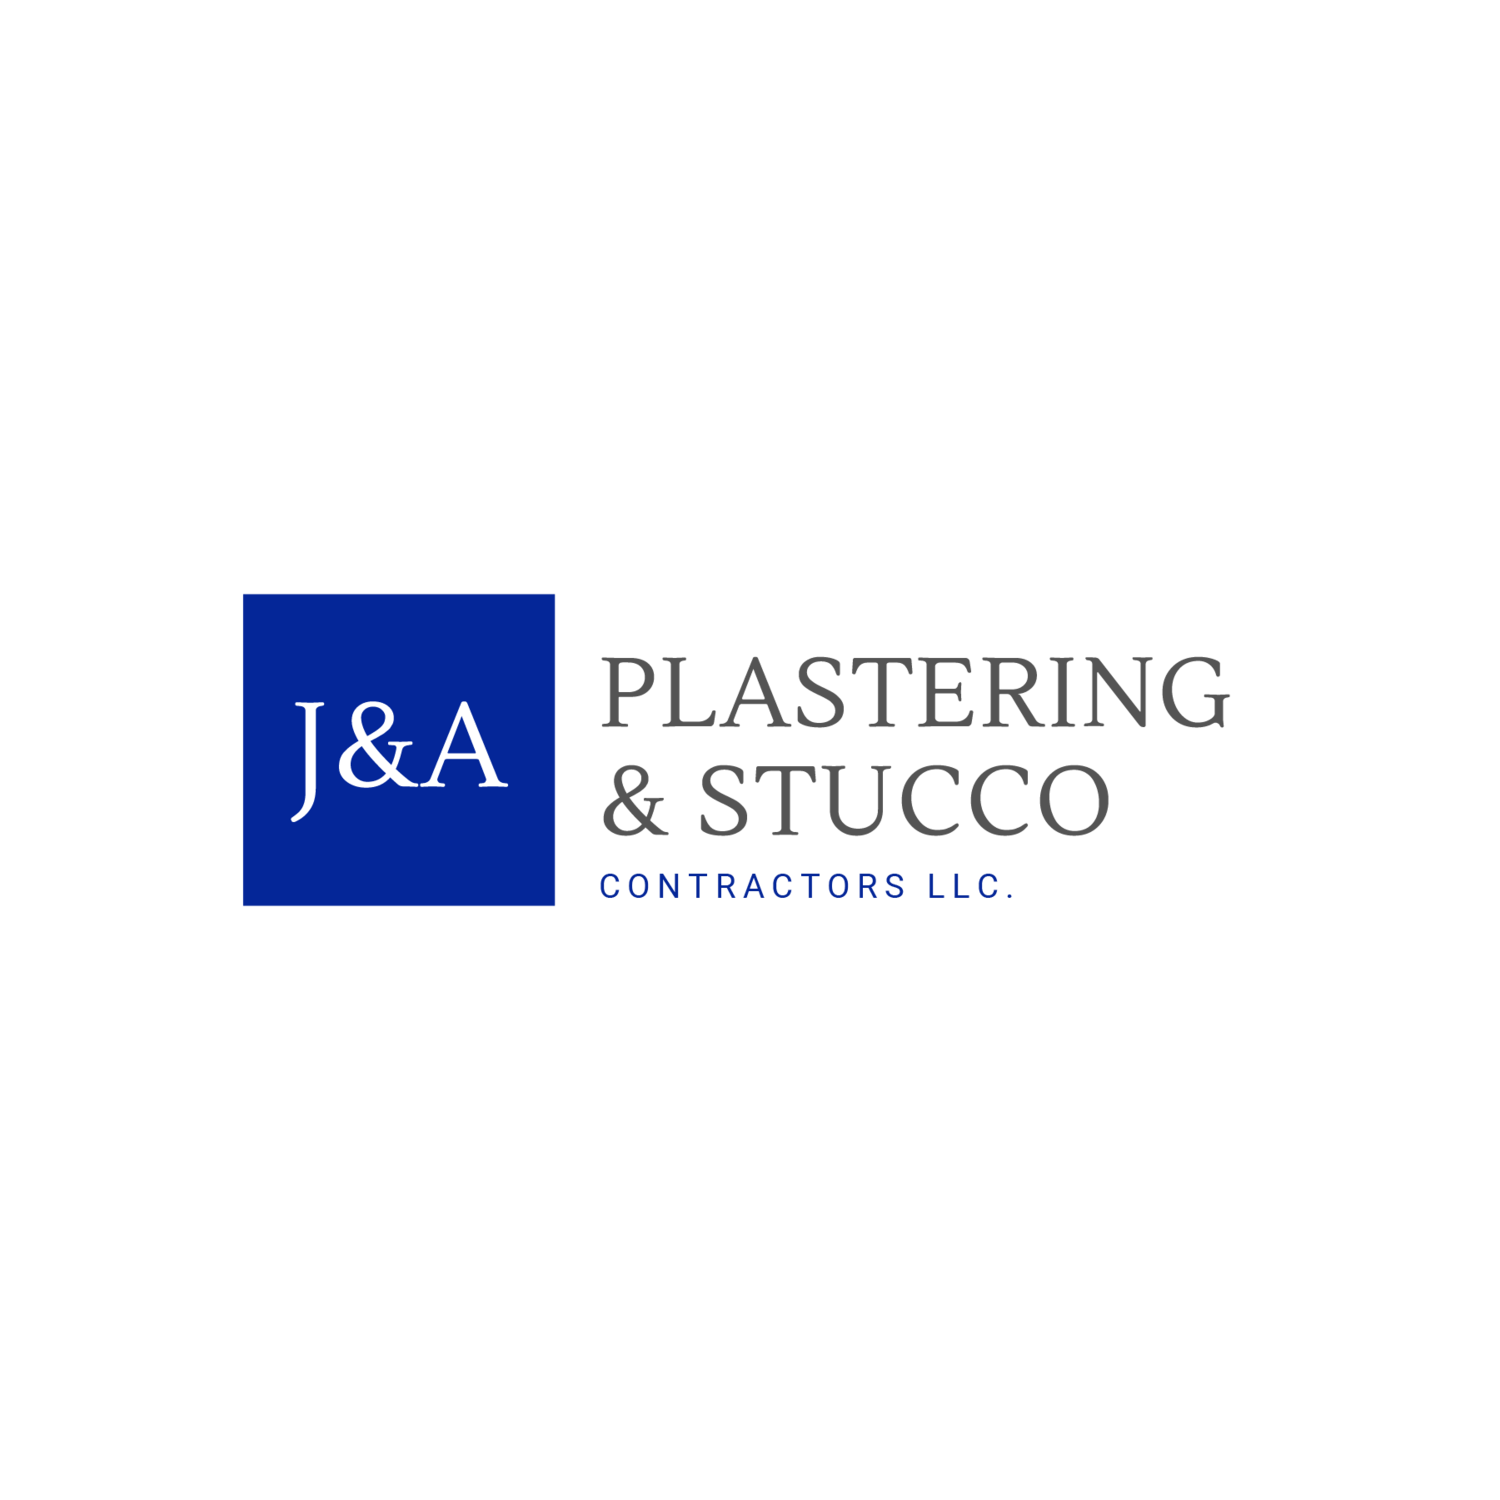 Stucco Logo - J & A Plastering & Stucco